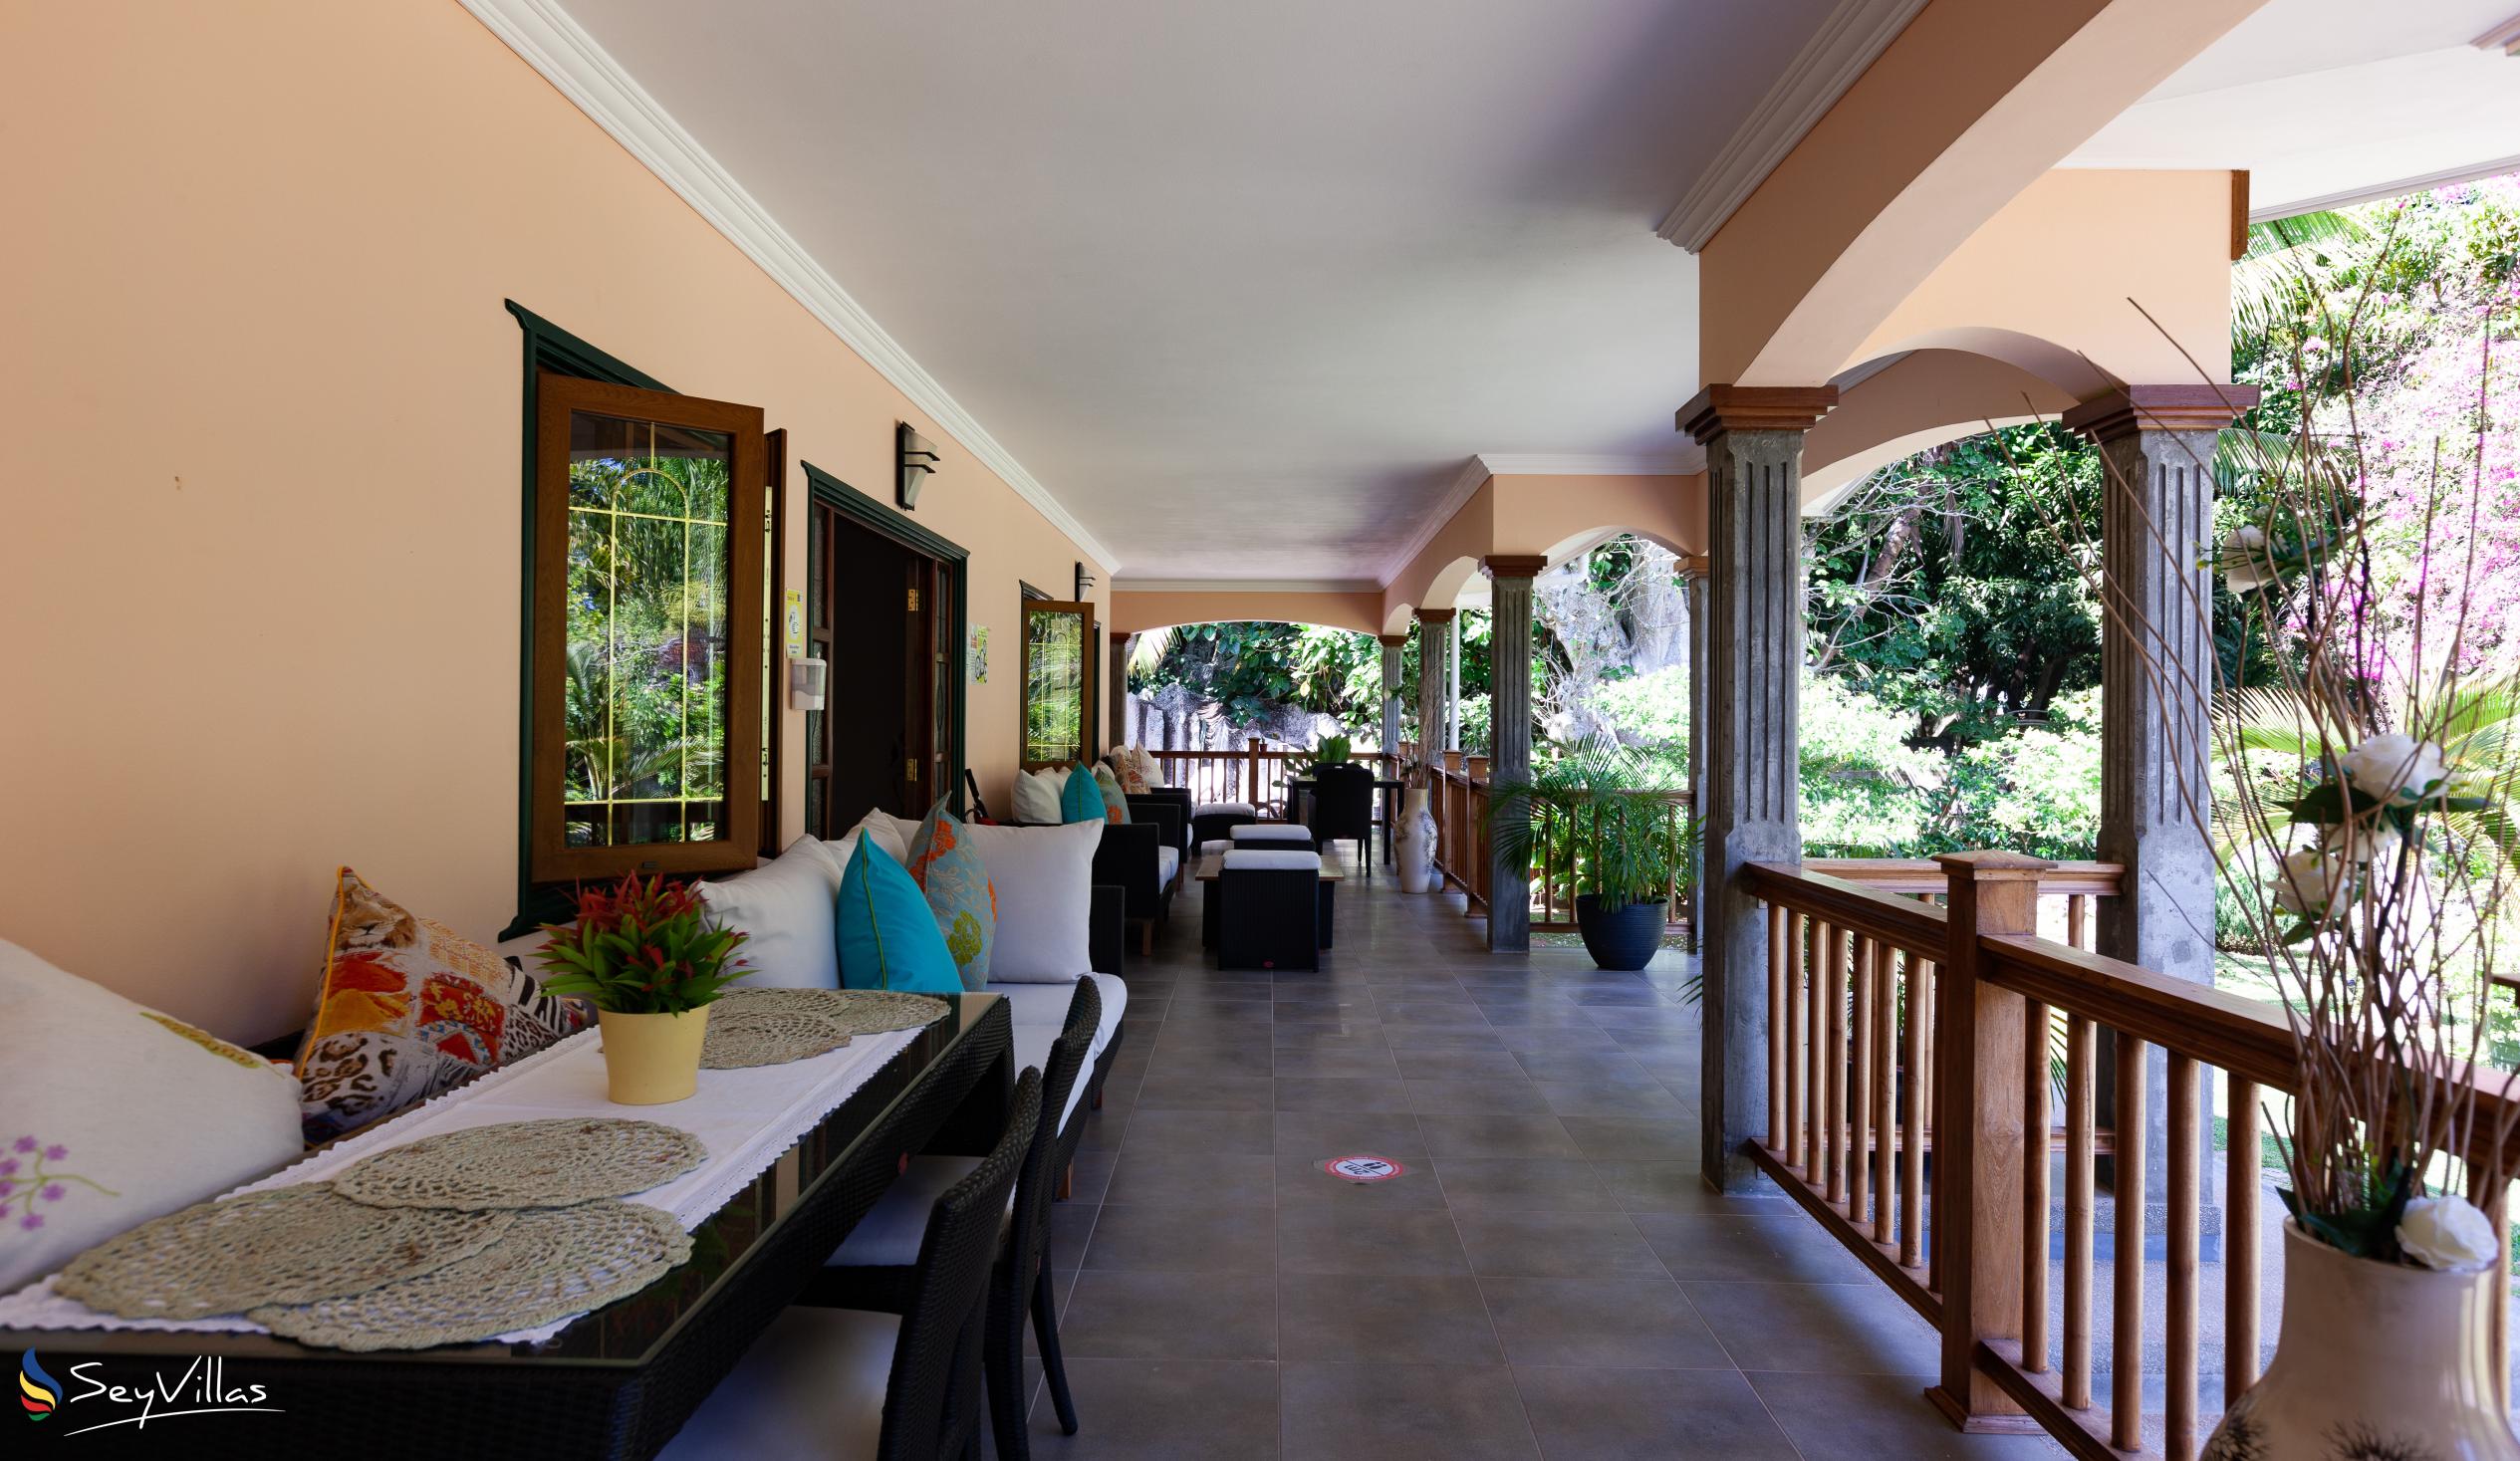 Foto 10: Pension Michel - Villa Roche Bois - Innenbereich - La Digue (Seychellen)